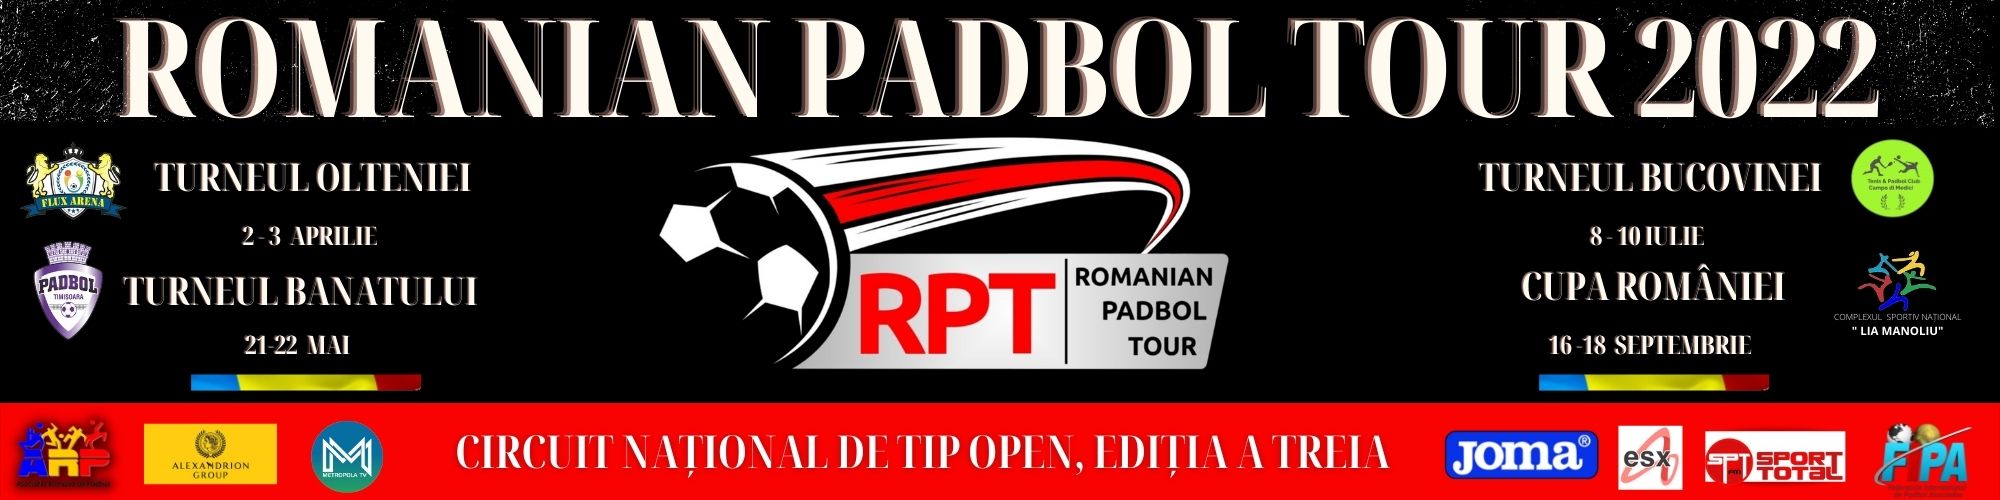 ROMANIAN PADDBOL TOUR 2022